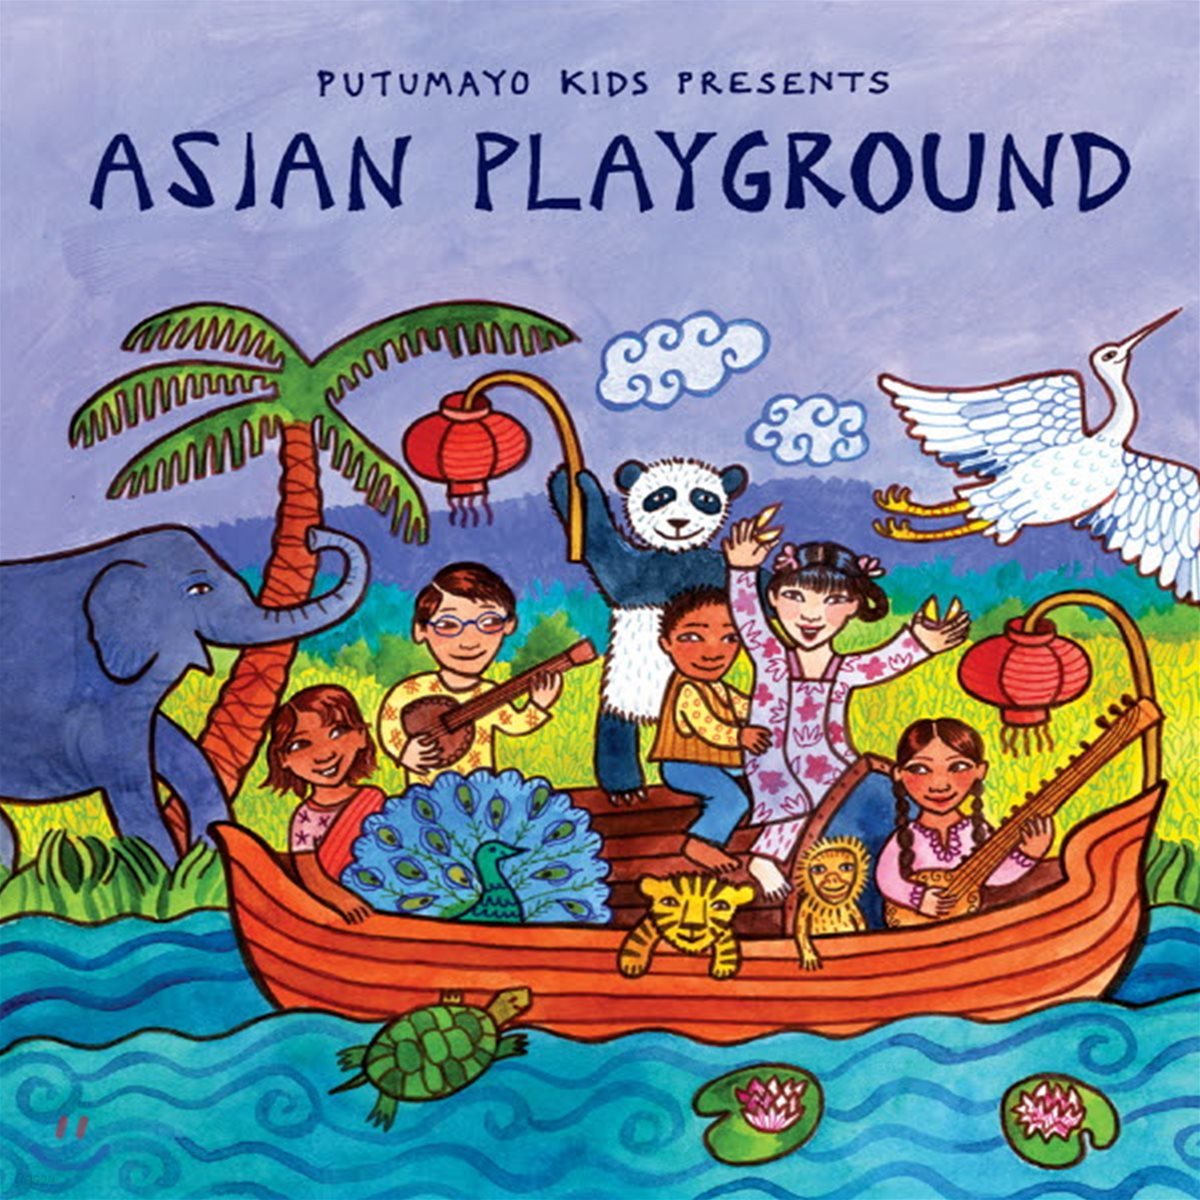 Putumayo Kids Presents Asian Playground (푸투마요 키즈 프레젠트 아시안 플레이그라운드)